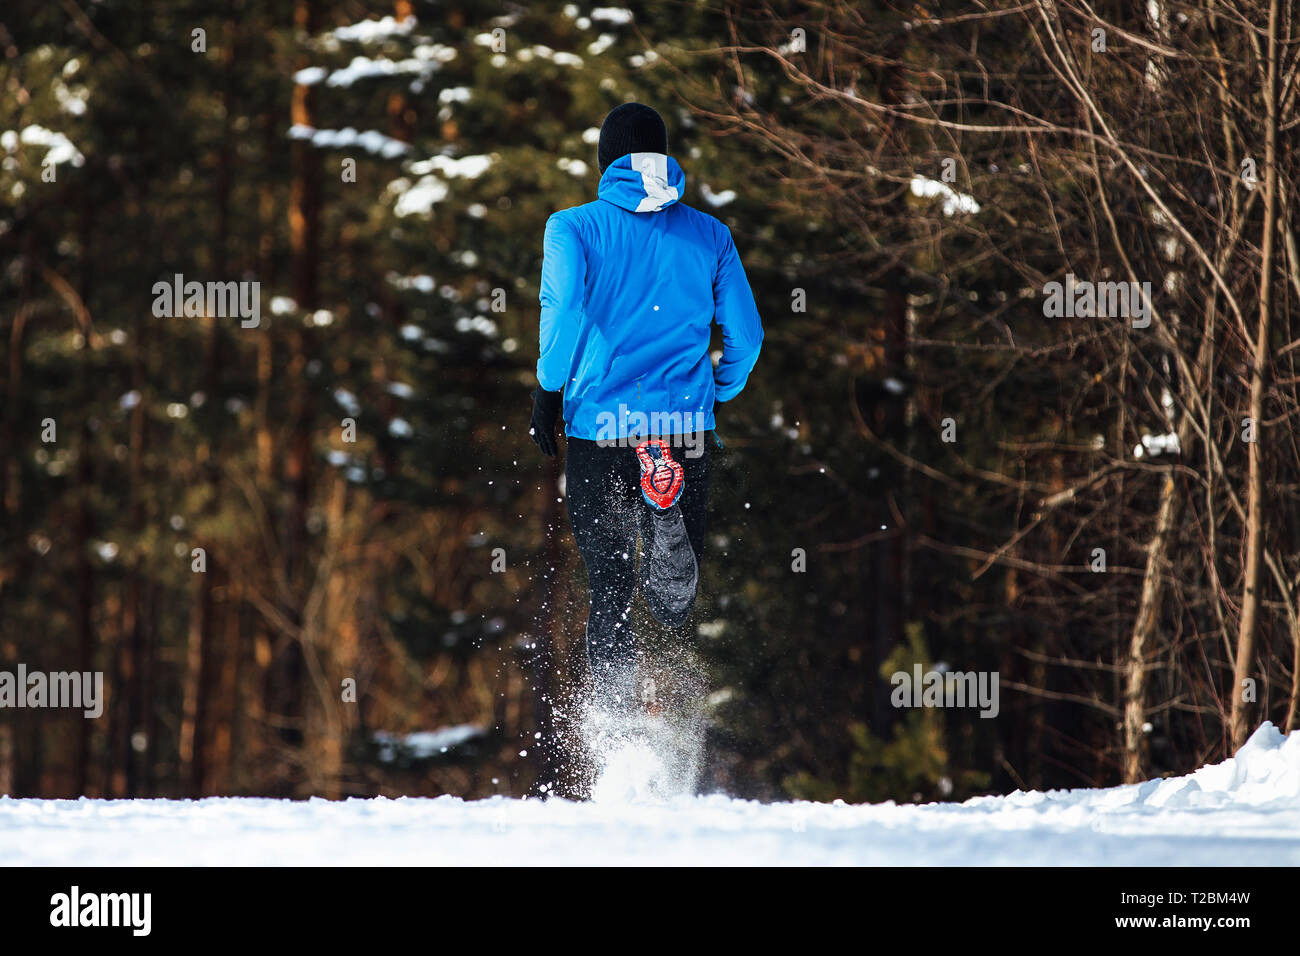 Torna atleta runner acceso sentiero invernale neve spray mosche Foto Stock